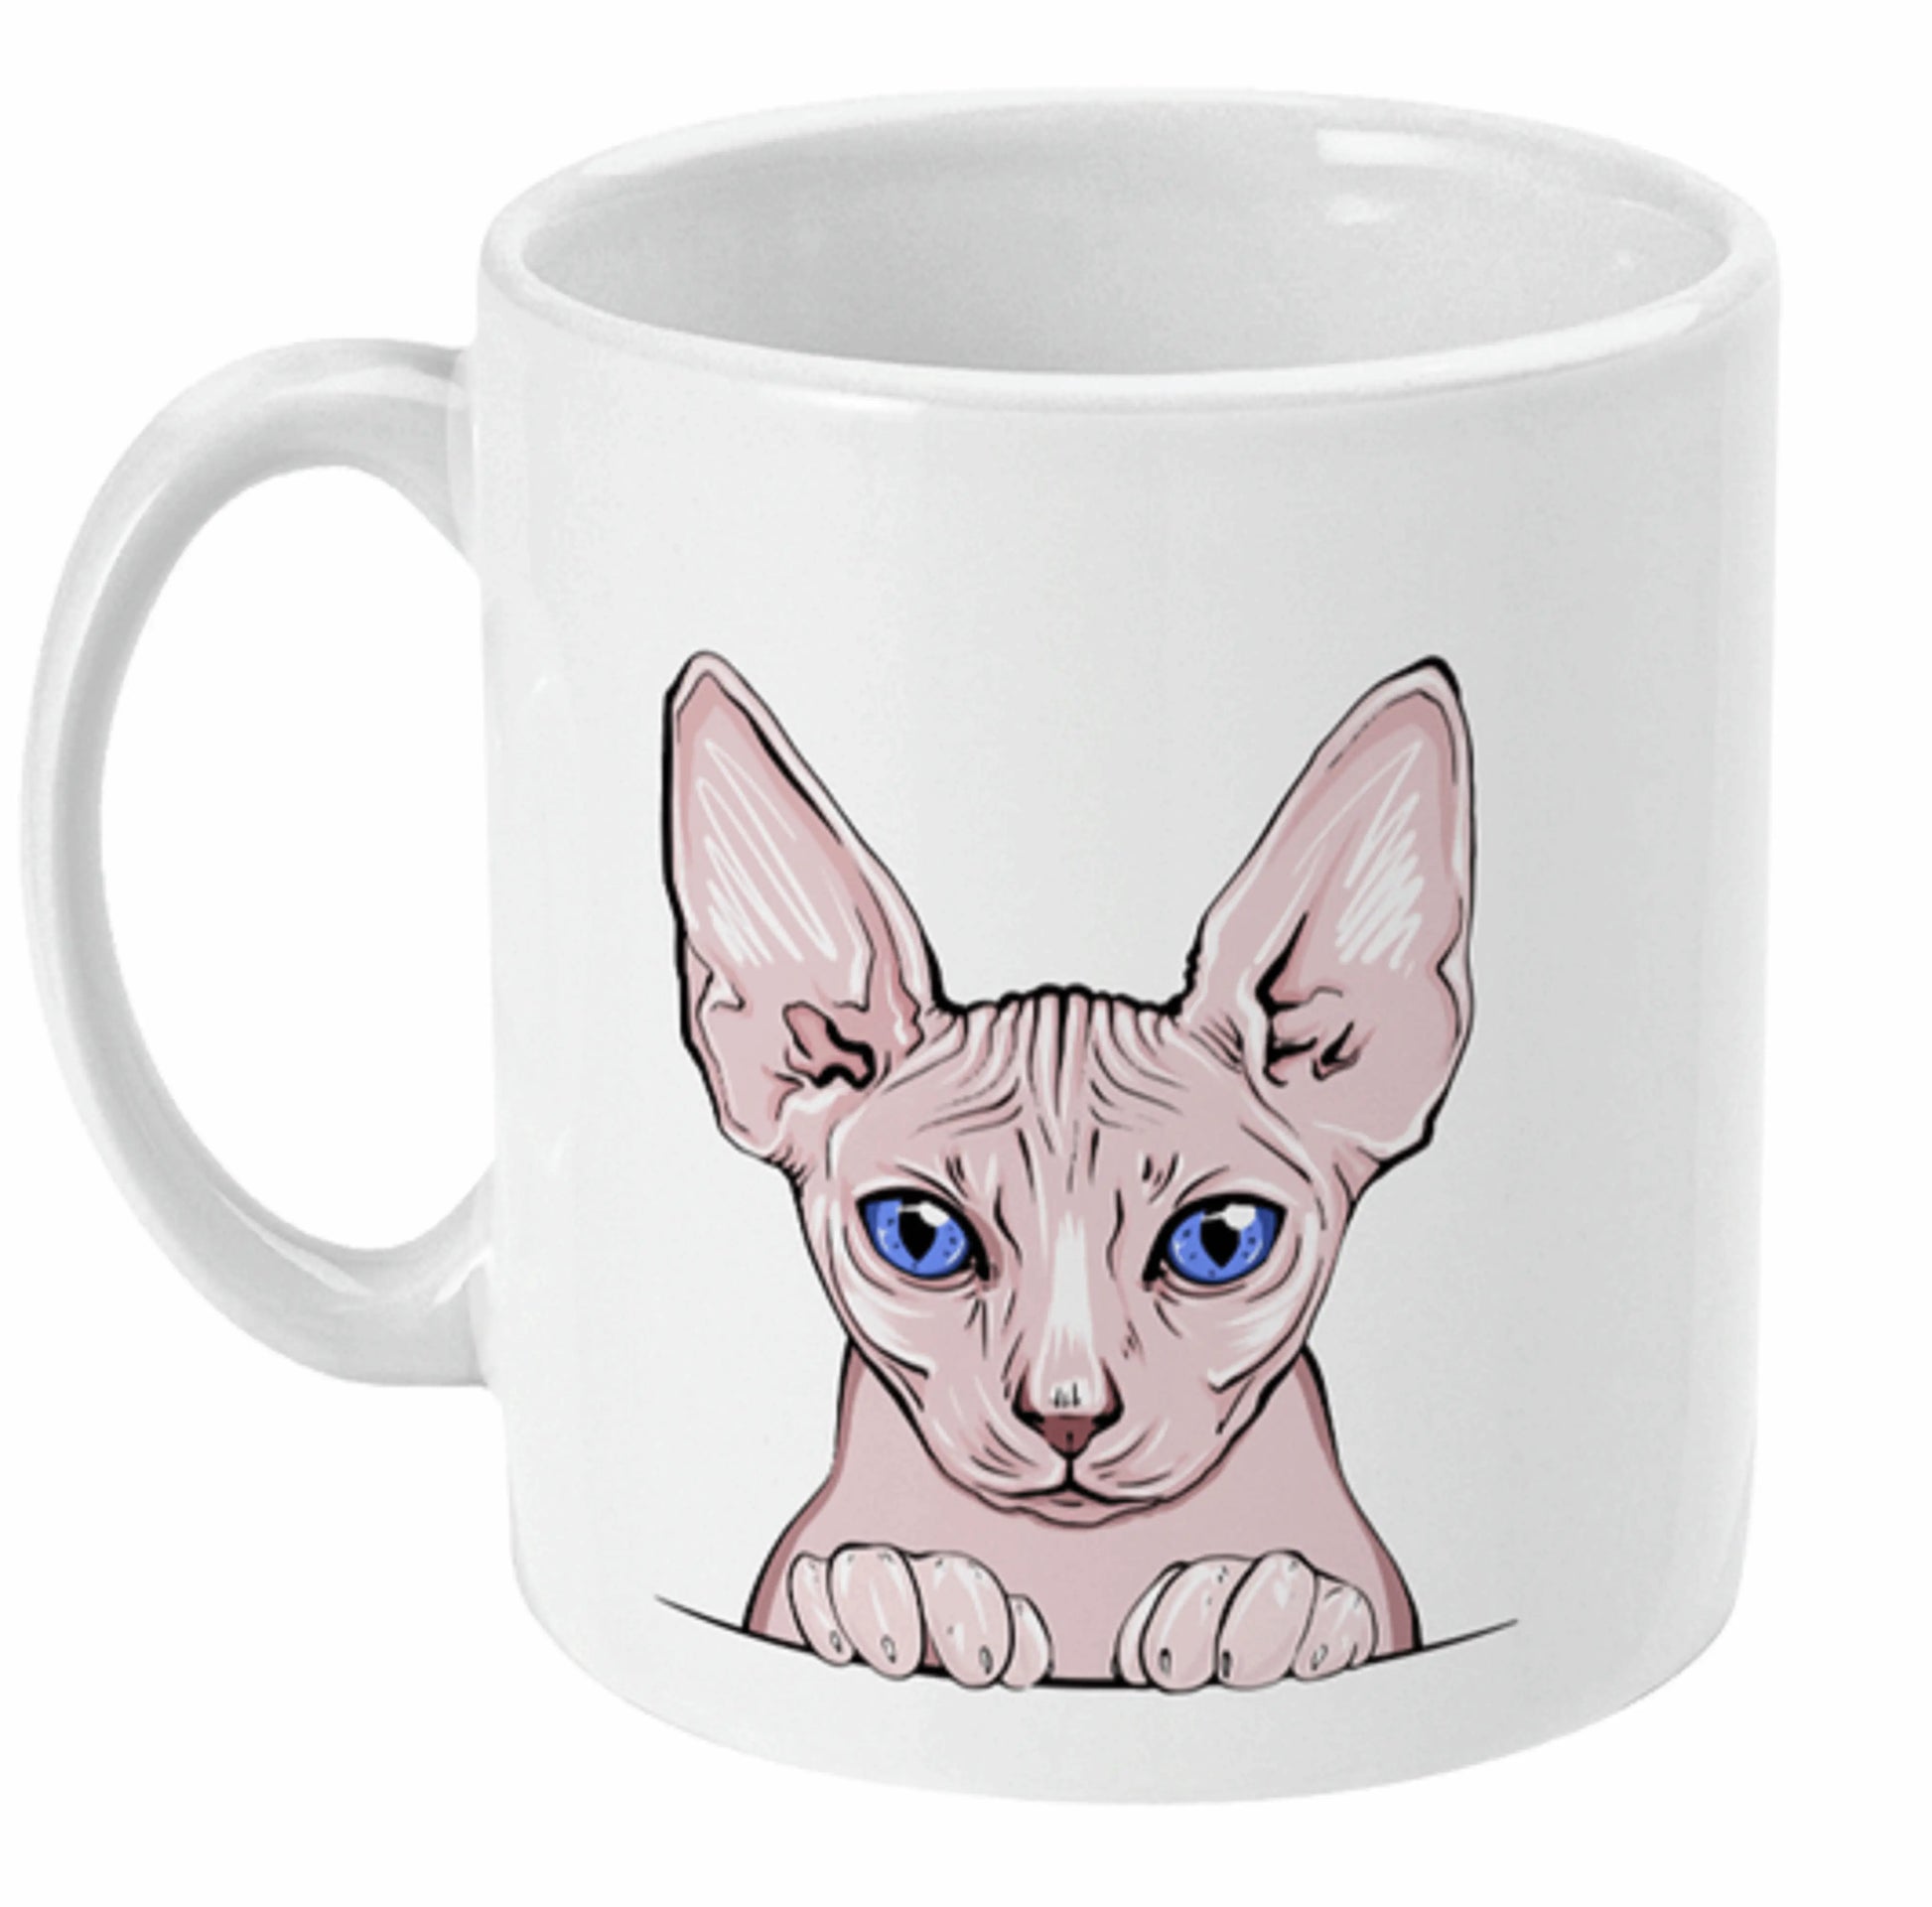  Beautiful Sphynx Cat Coffee Mug by Free Spirit Accessories sold by Free Spirit Accessories